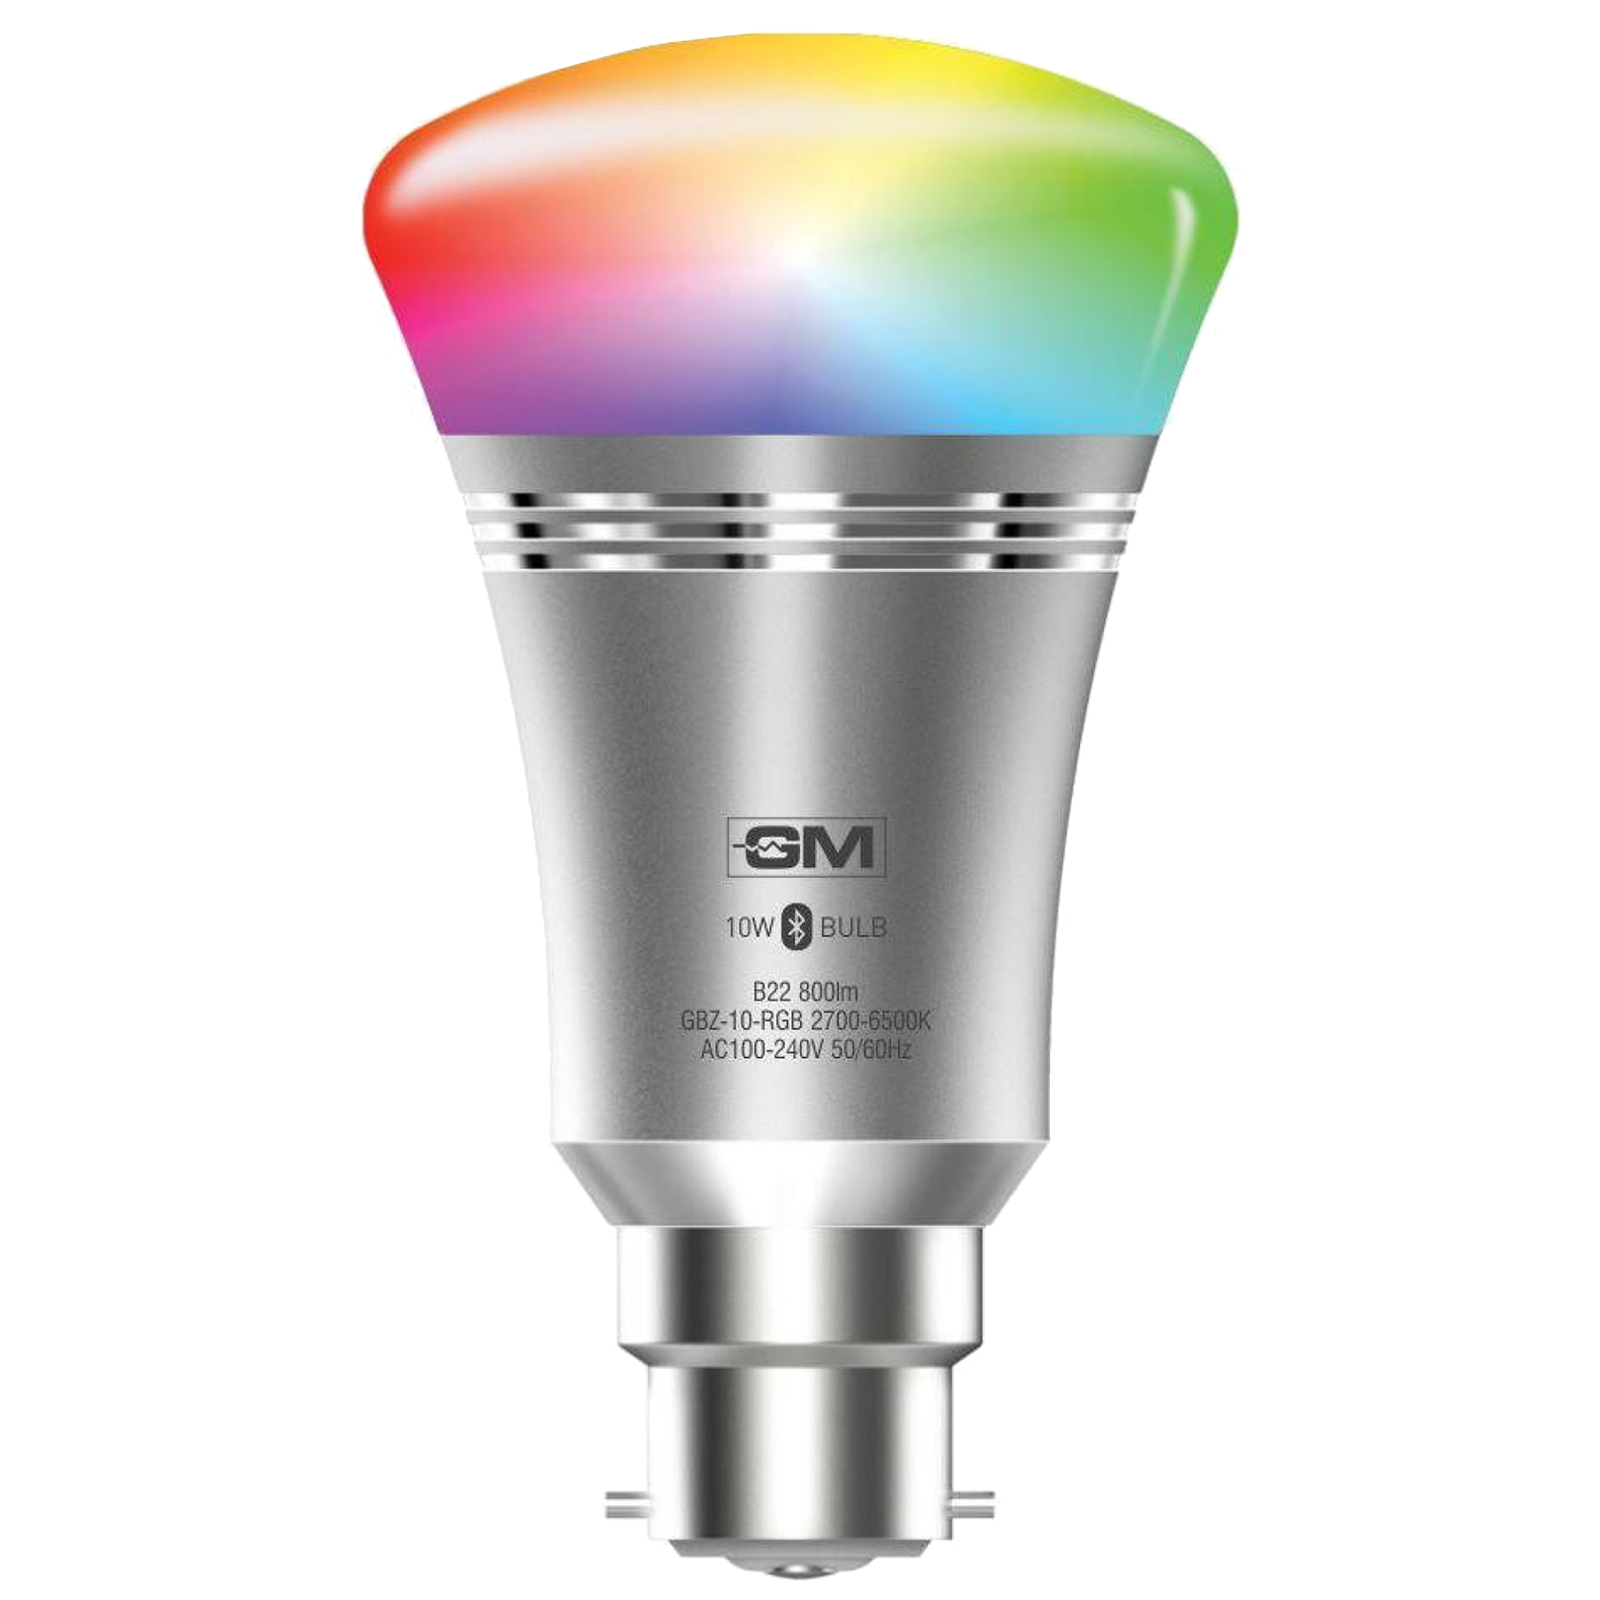 GM Glitz Air 10 Watts LED Smart Bulb (Color Changing App Controlled Bluetooth, GBZ-10-RGBWW-NA, Multicolor/Silver)